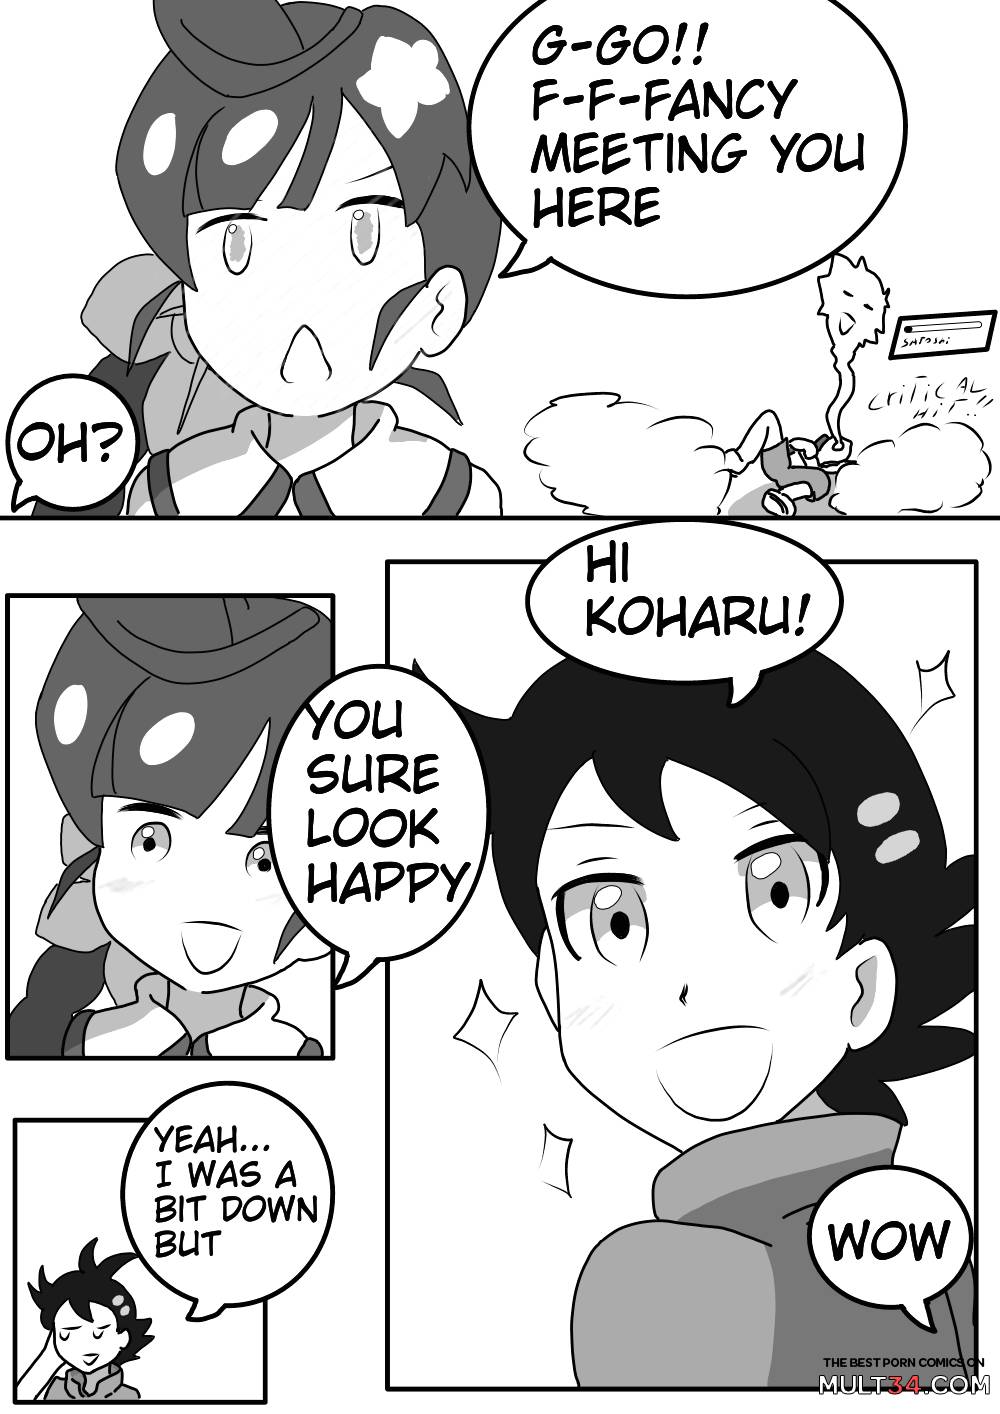 Satoshi and Koharu's Daily talk 3 page 14